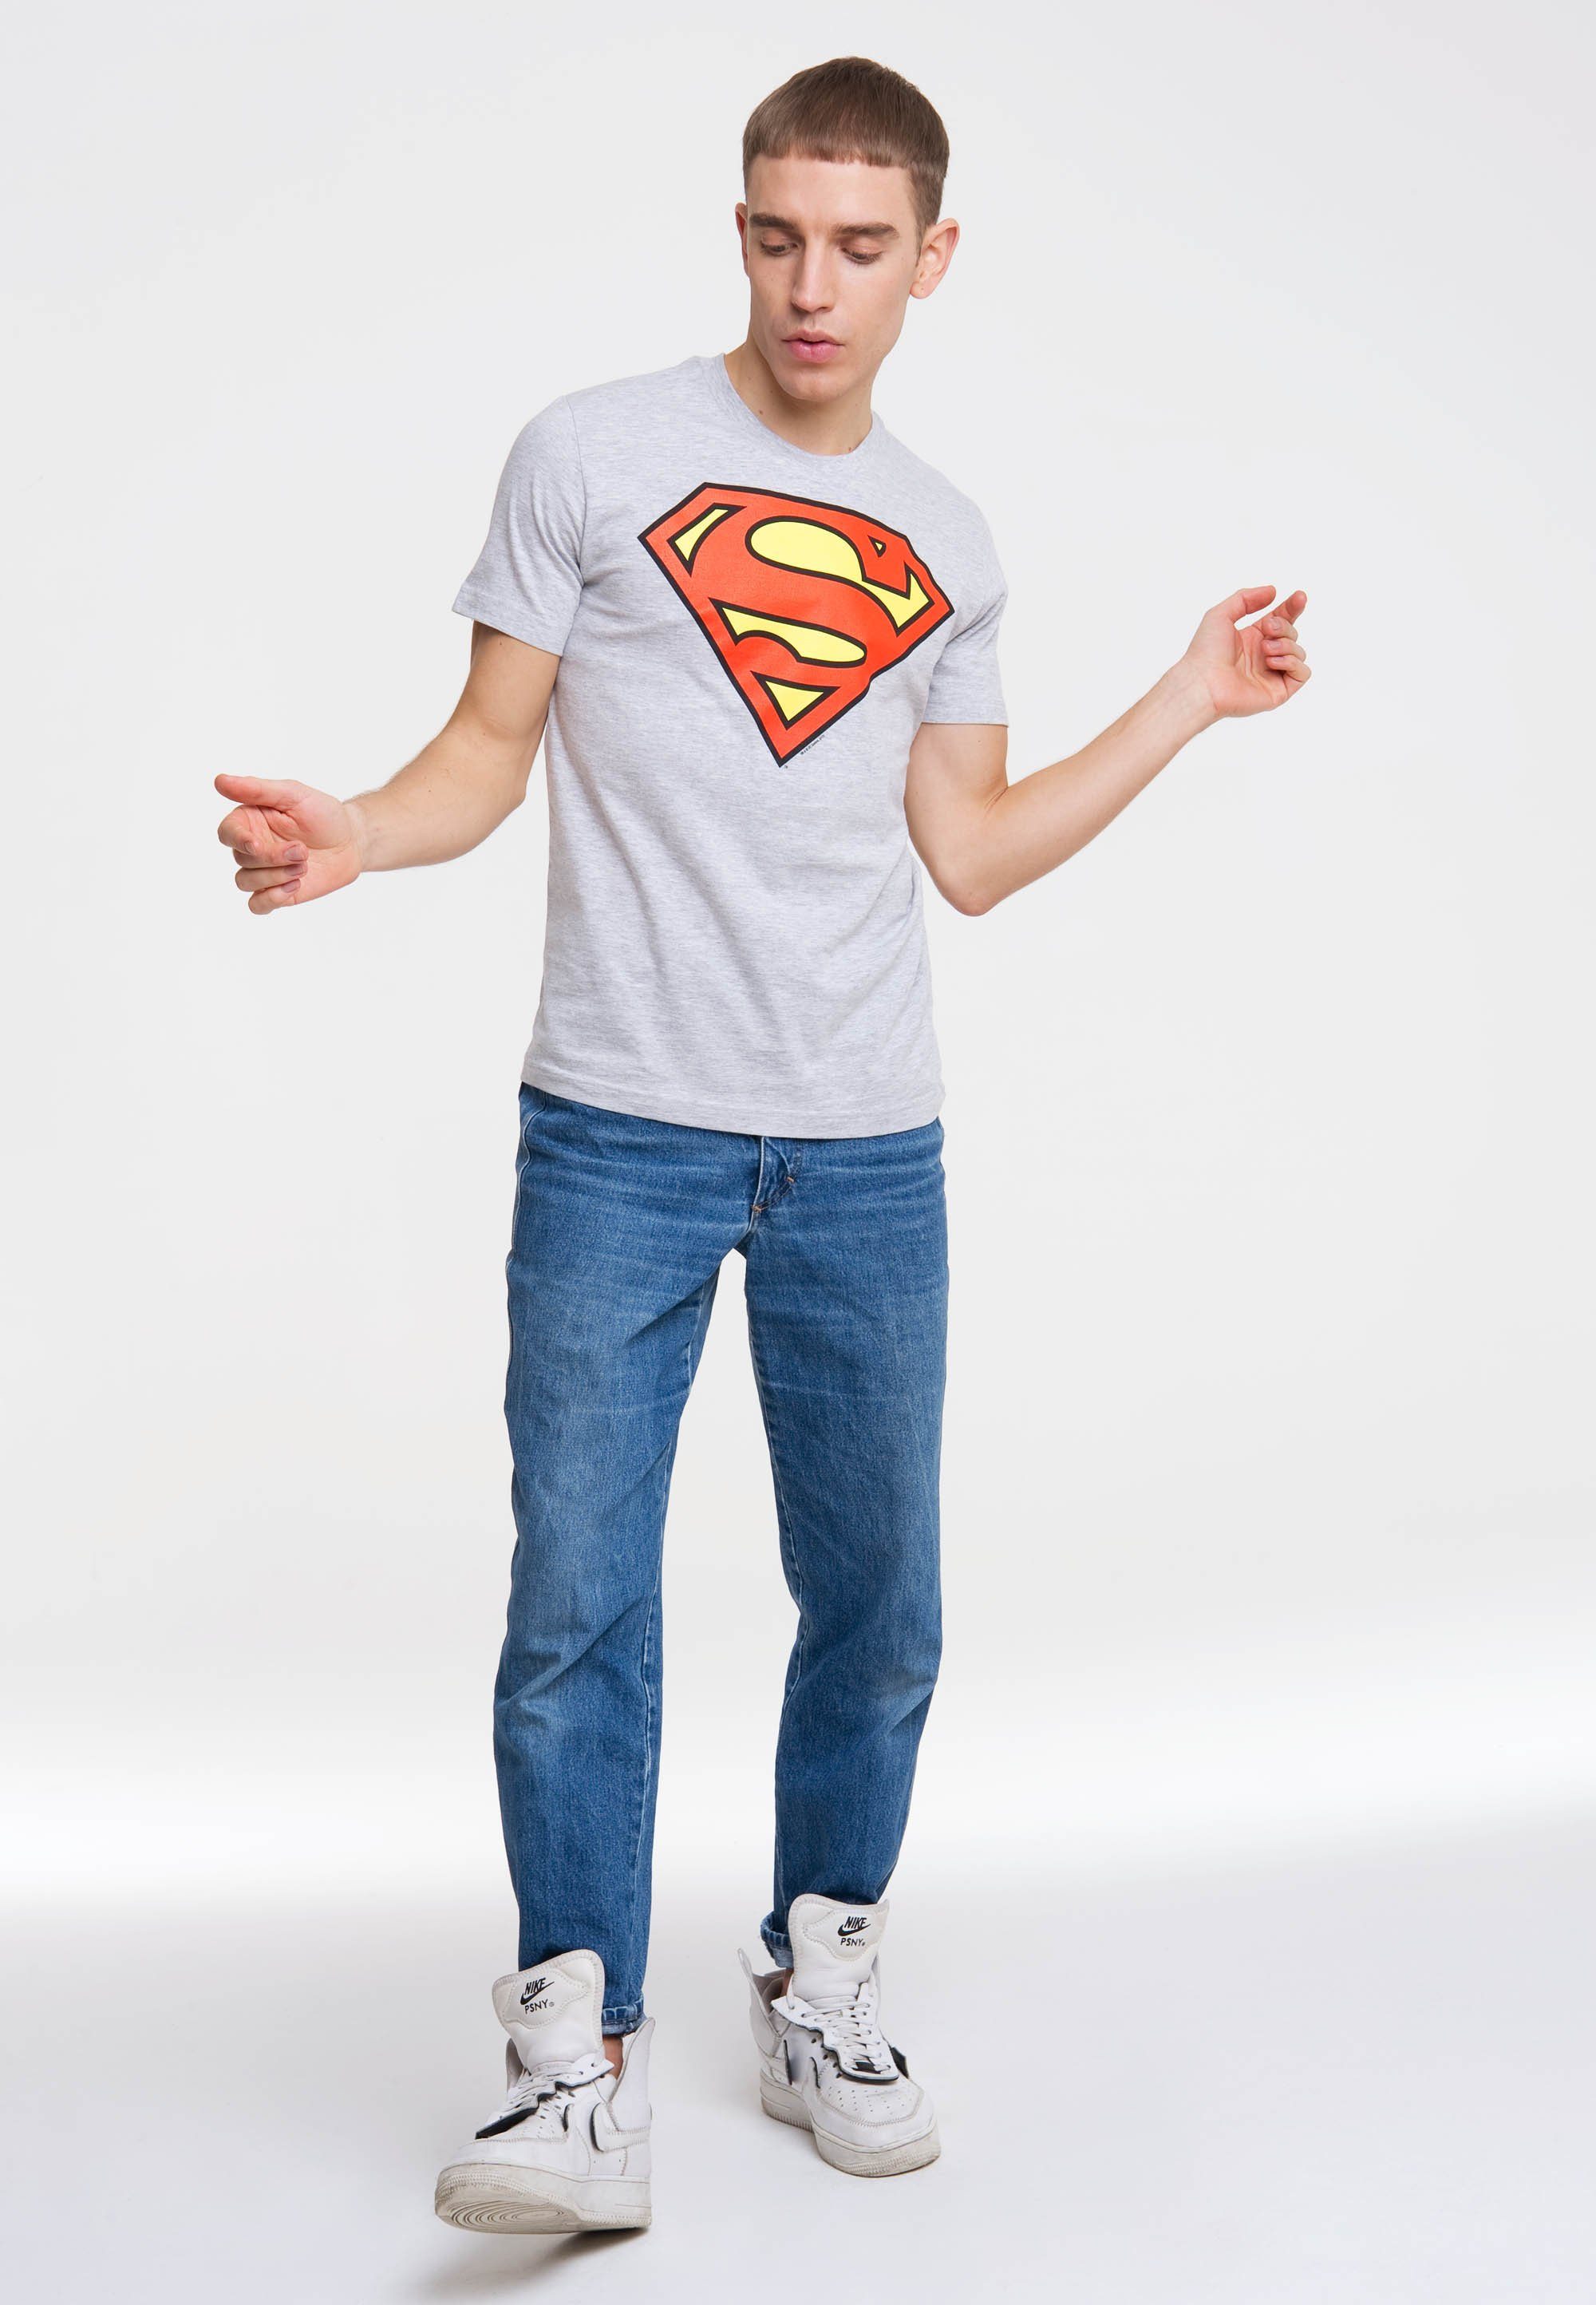 LOGOSHIRT T-Shirt SUPERMAN - LOGO mit Superhelden-Logo, Bequeme Passform  dank klassischem Rundhals-Ausschnitt | T-Shirts